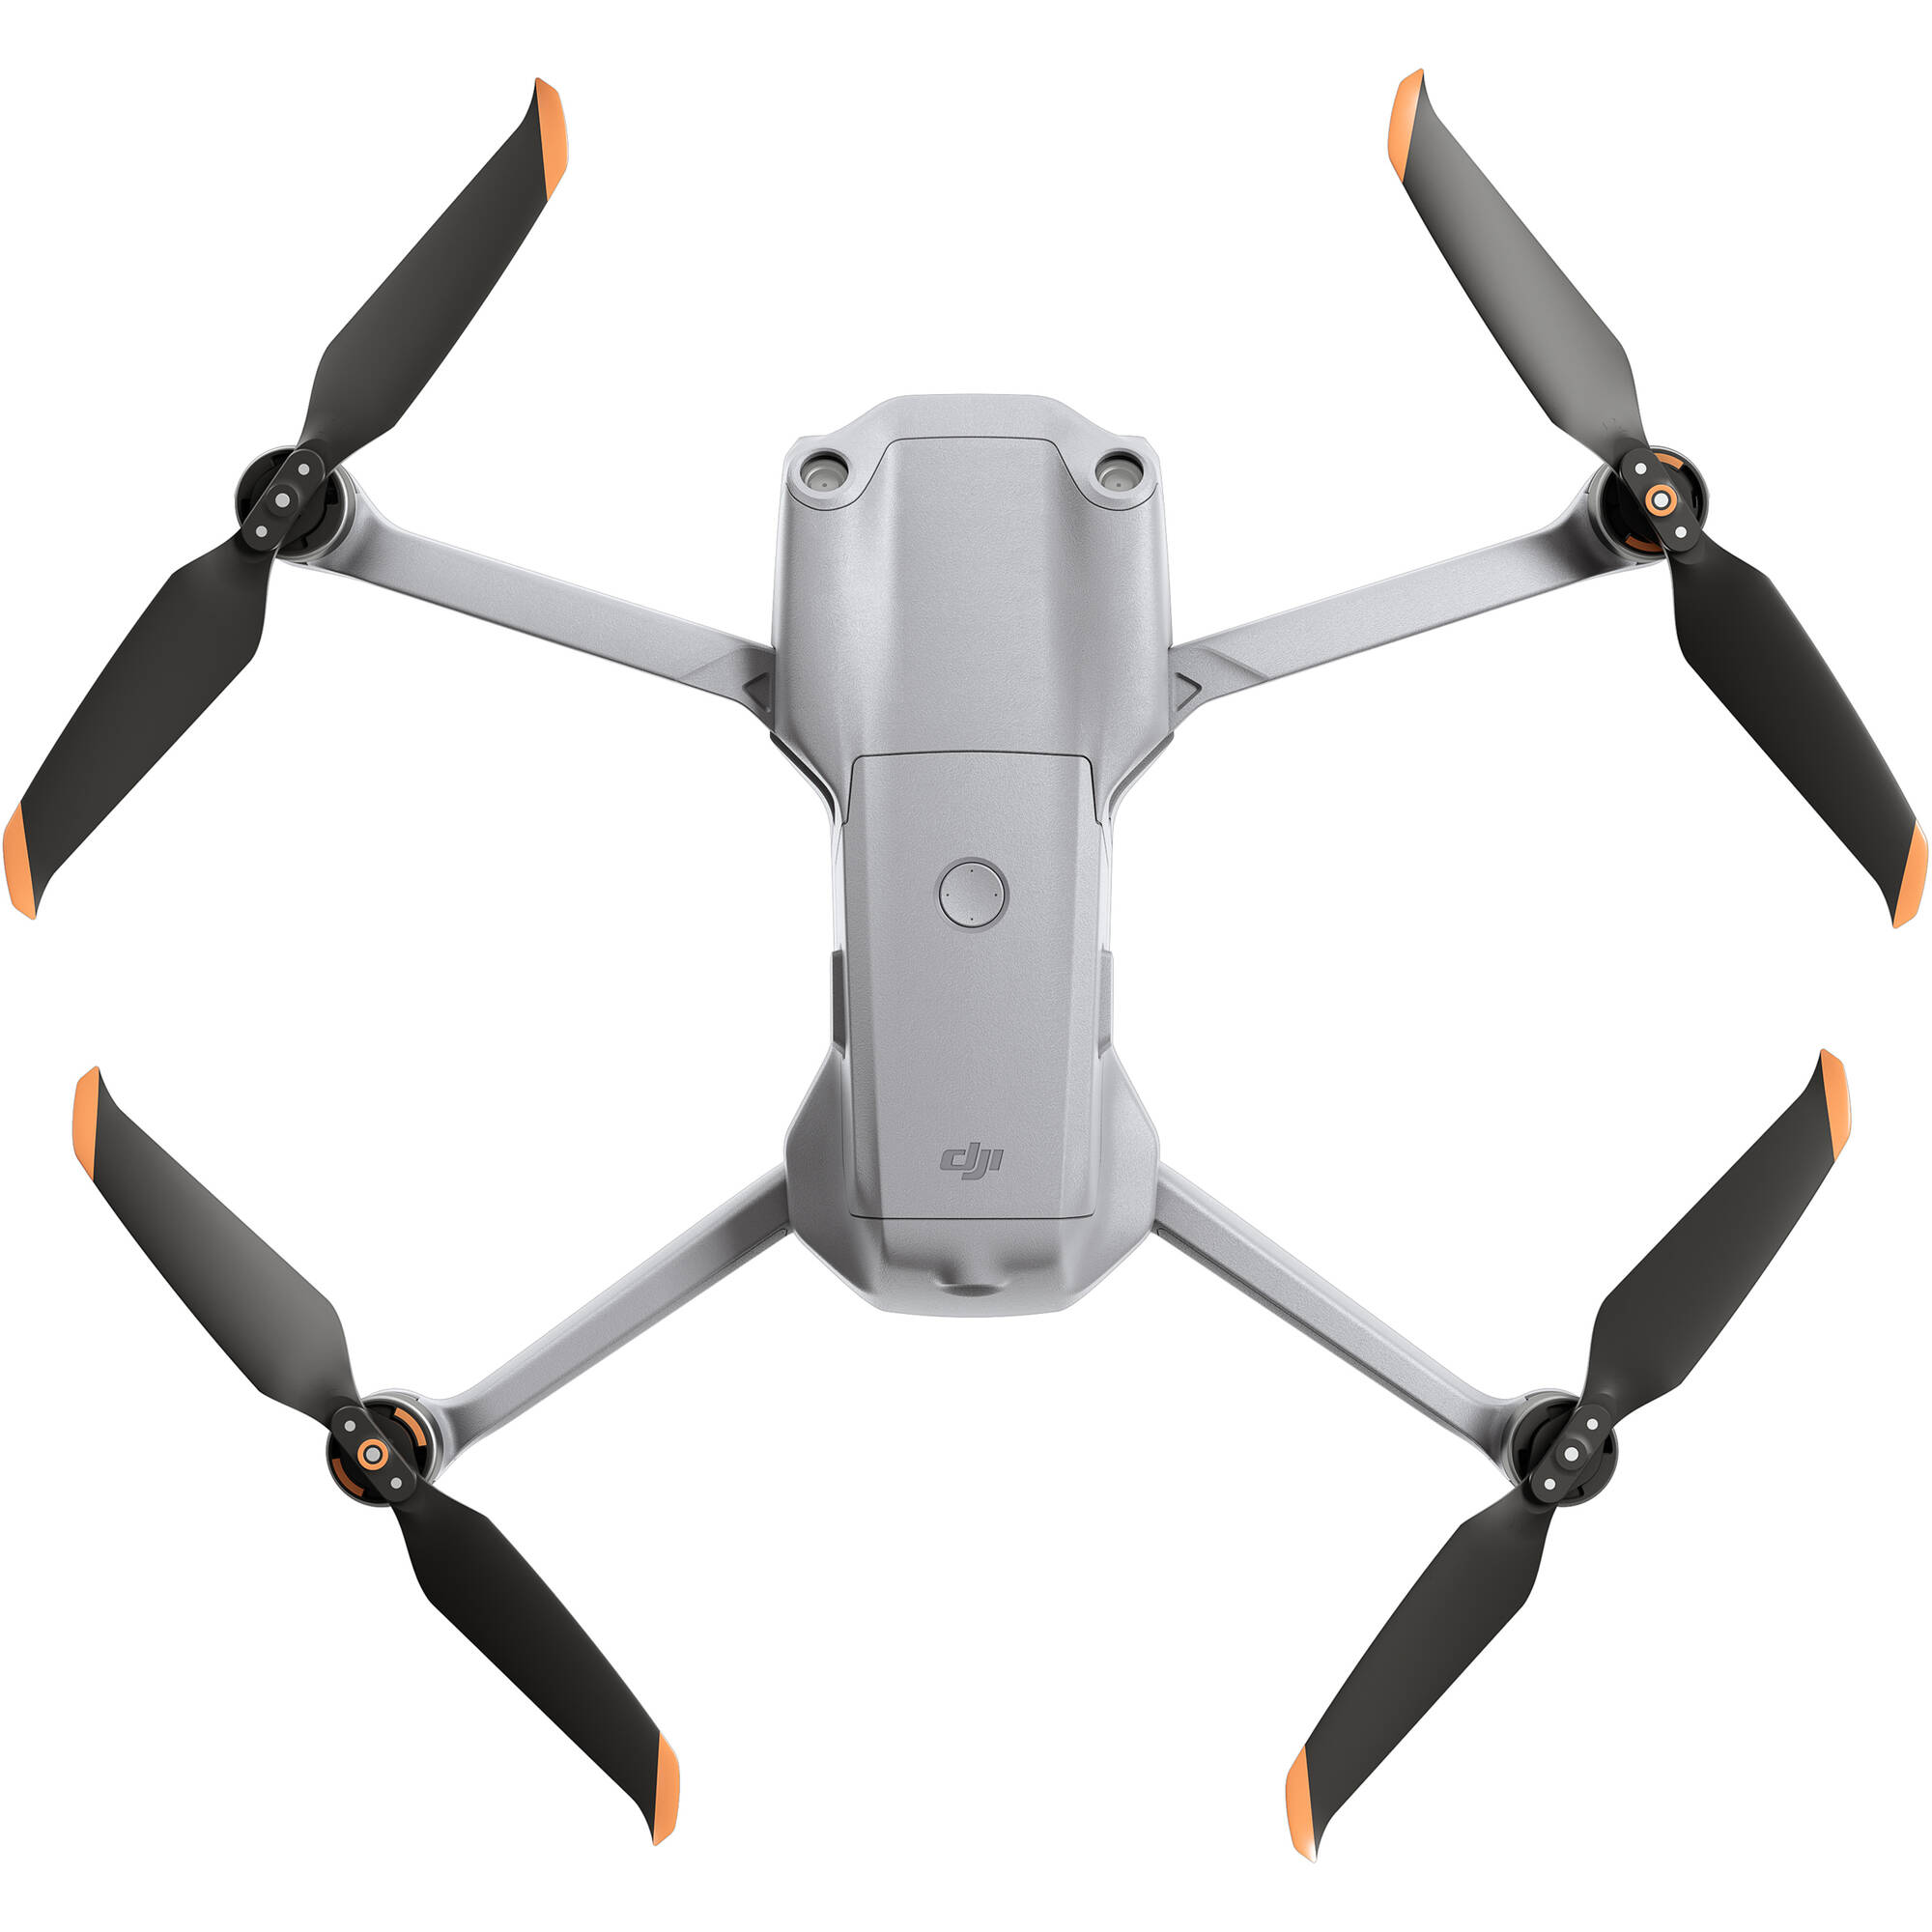 DJI Air 2S - Drone autonome